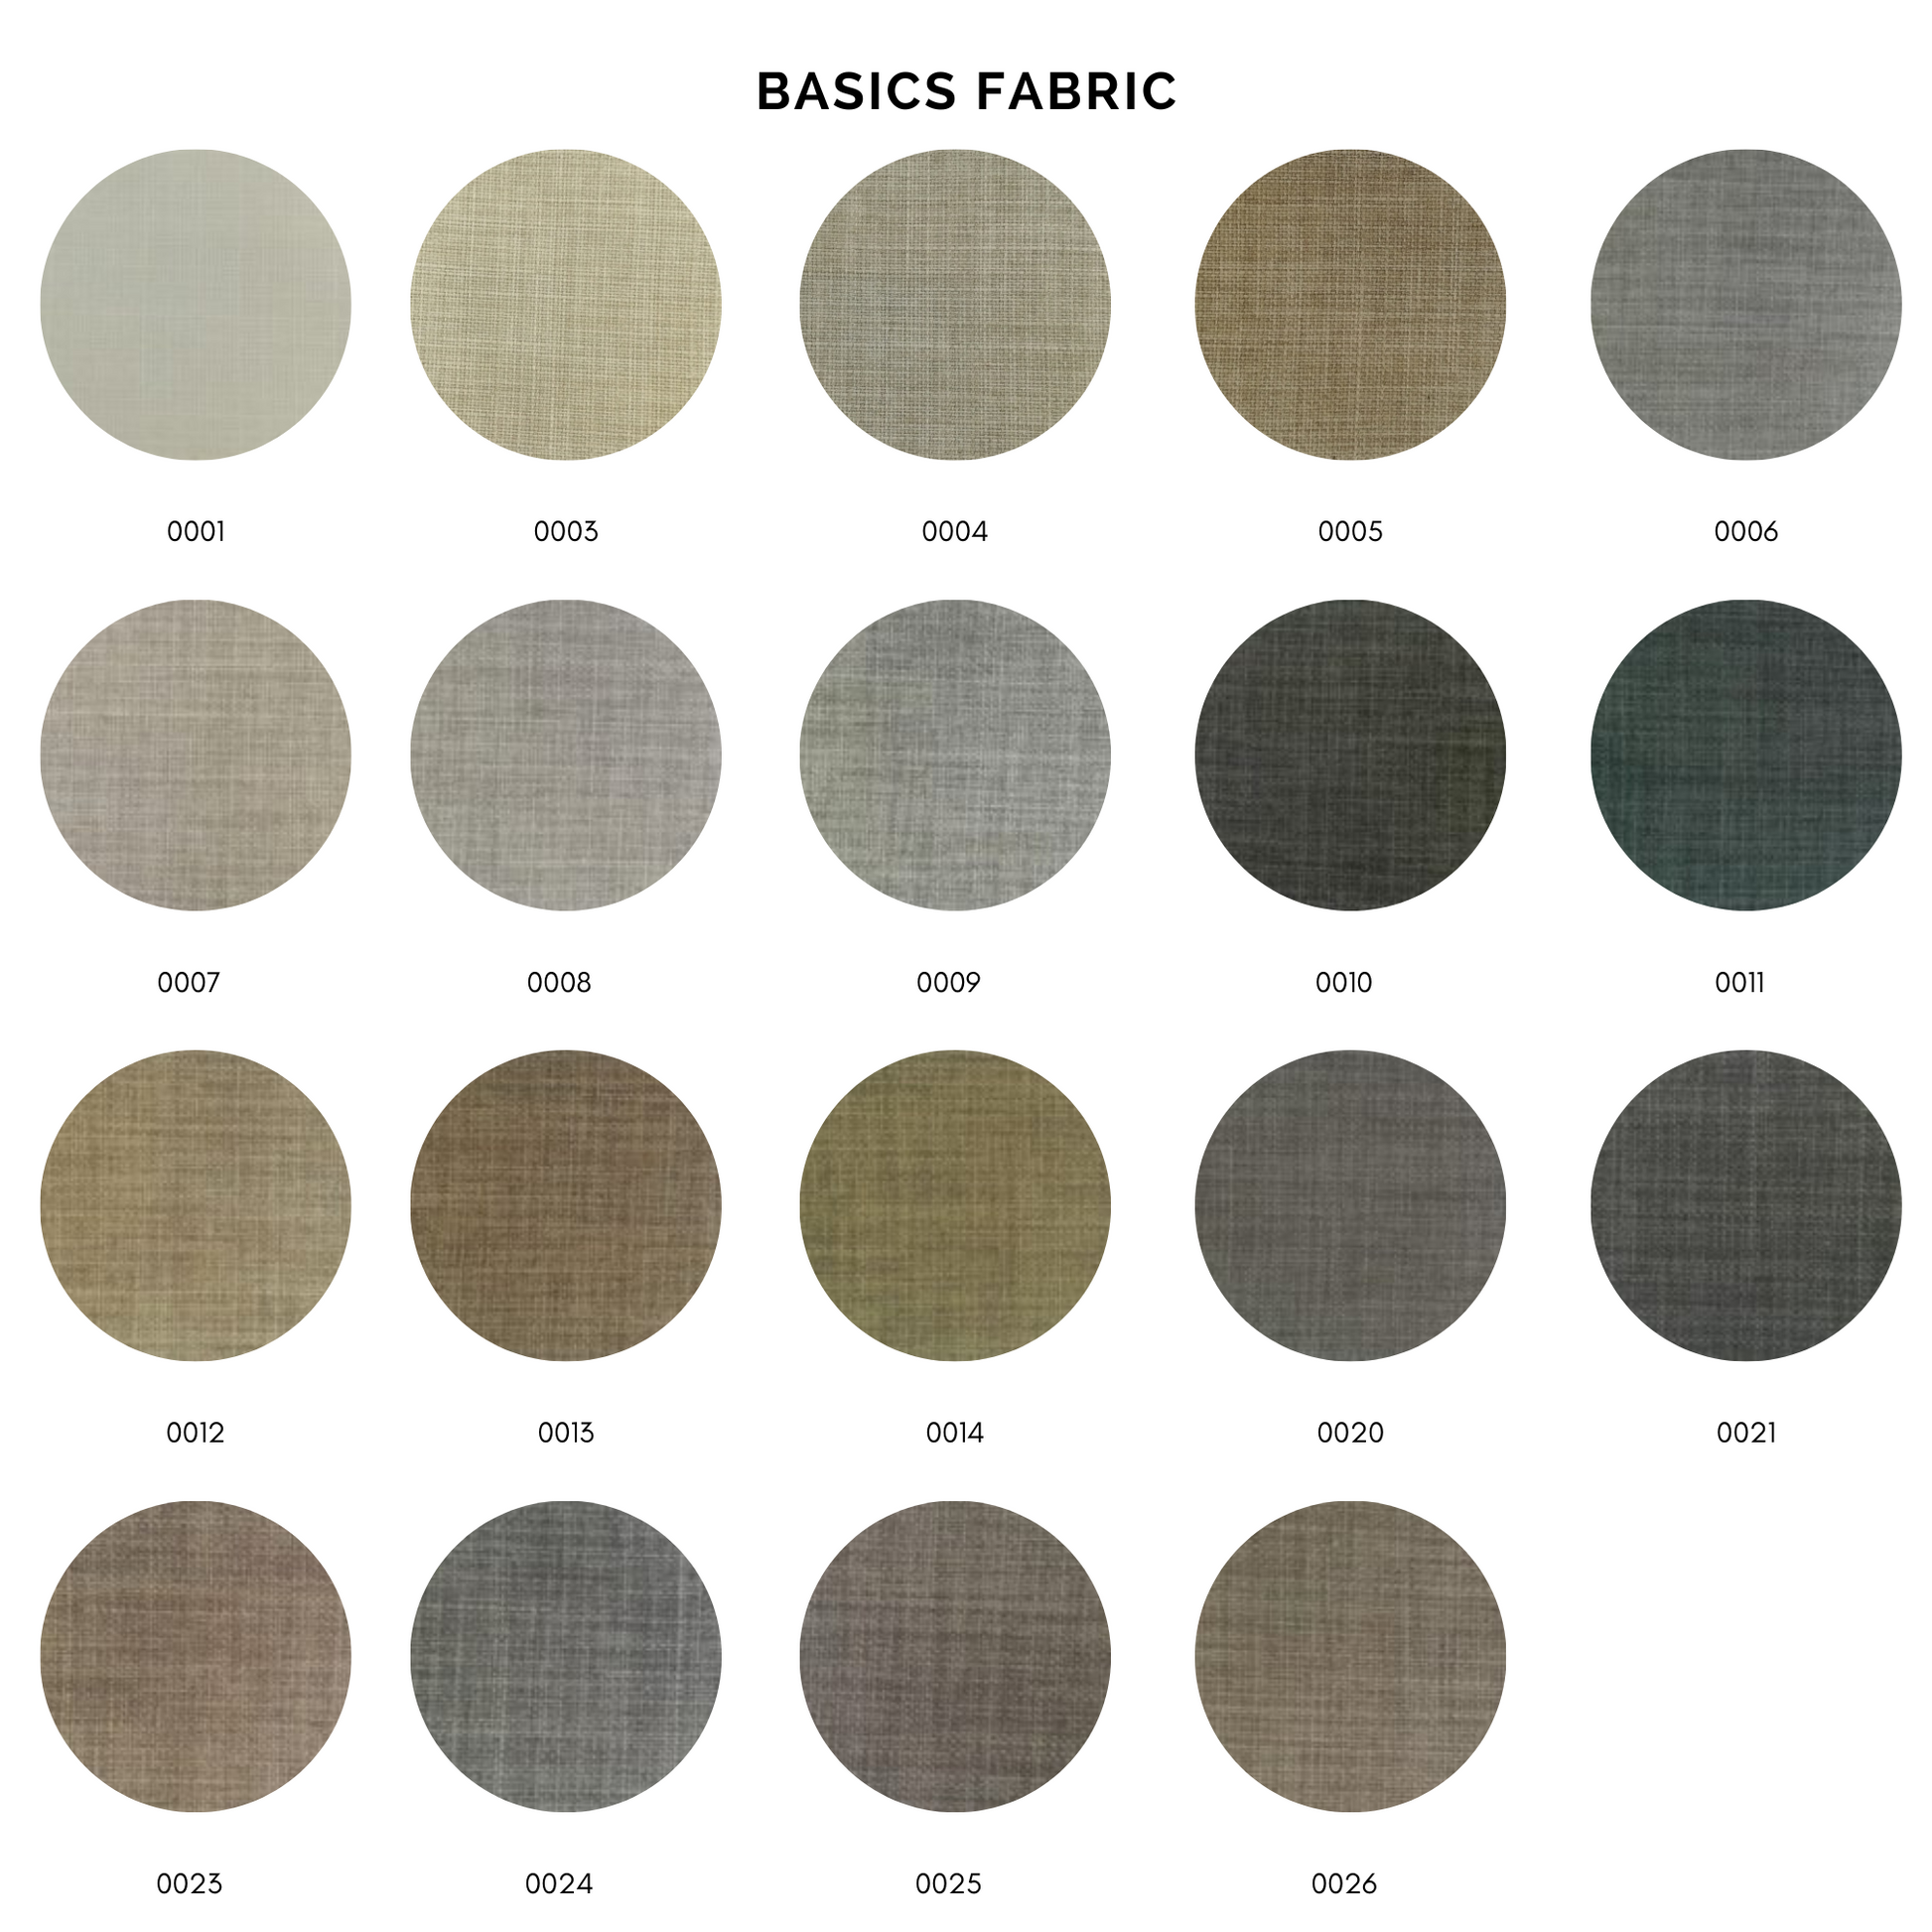 Noah Cot - Basics Fabric - Elula Furniture